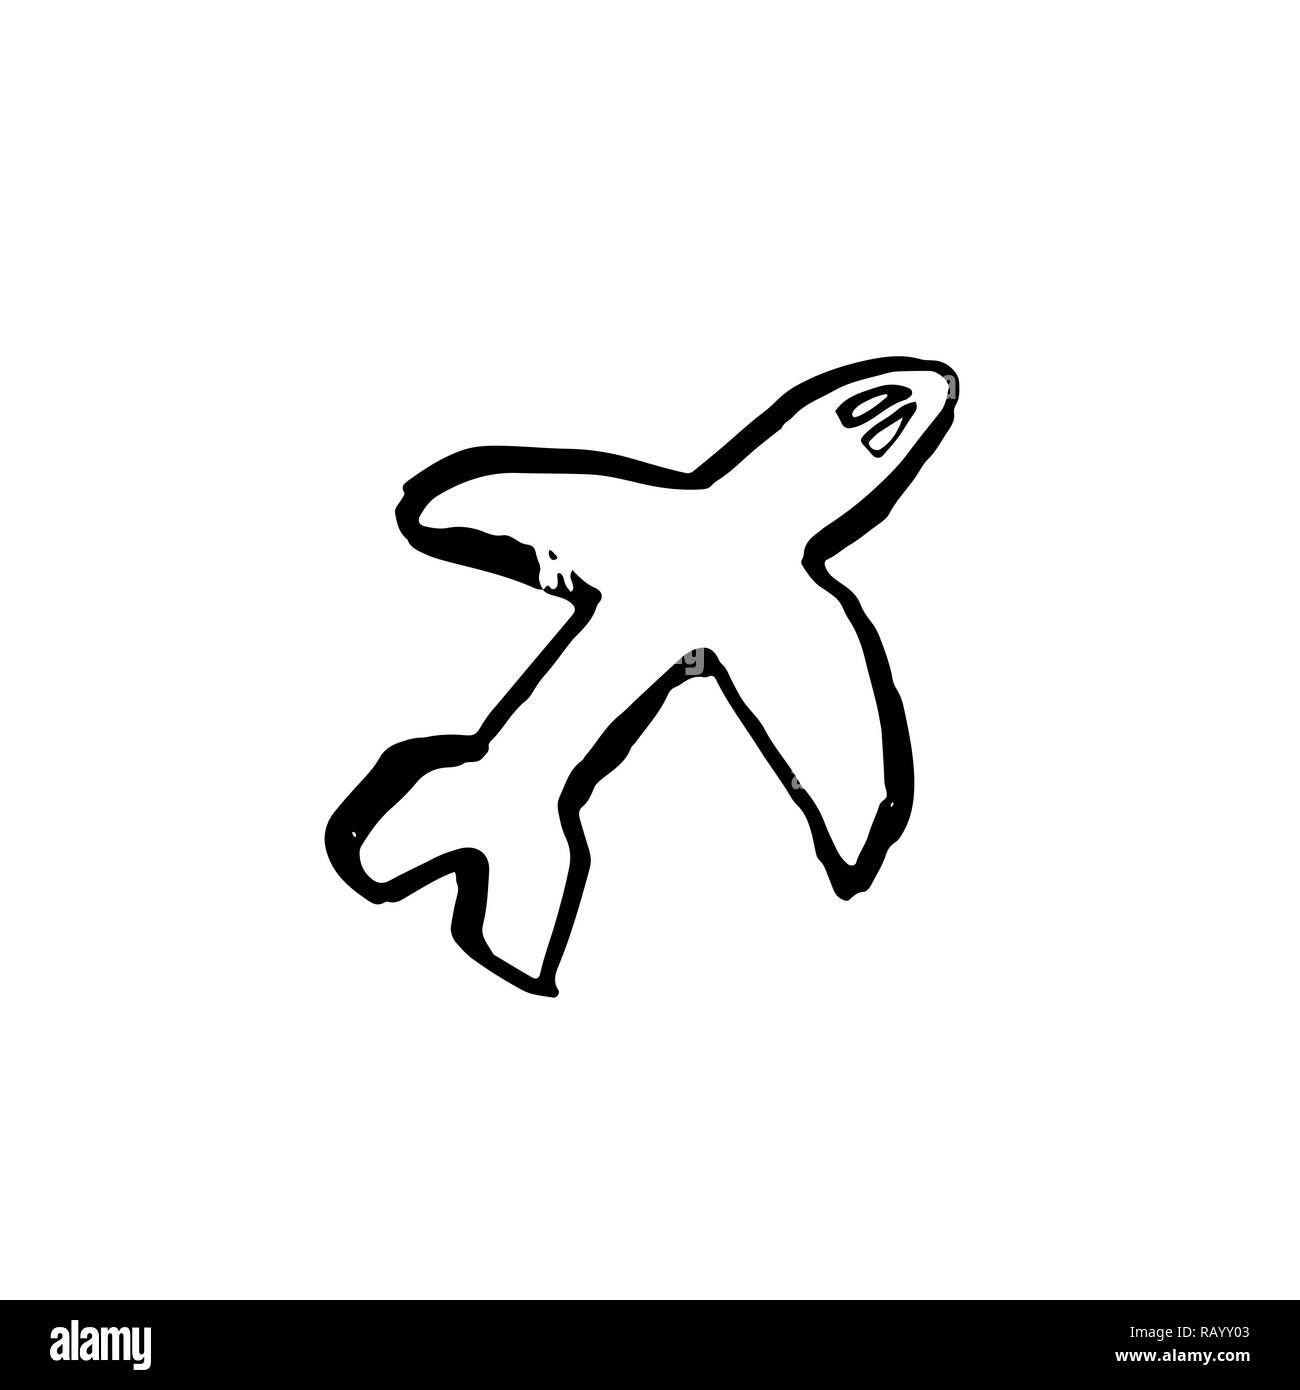 Plane grunge icon. Vector hand drawn brush illustration. Stock Vector